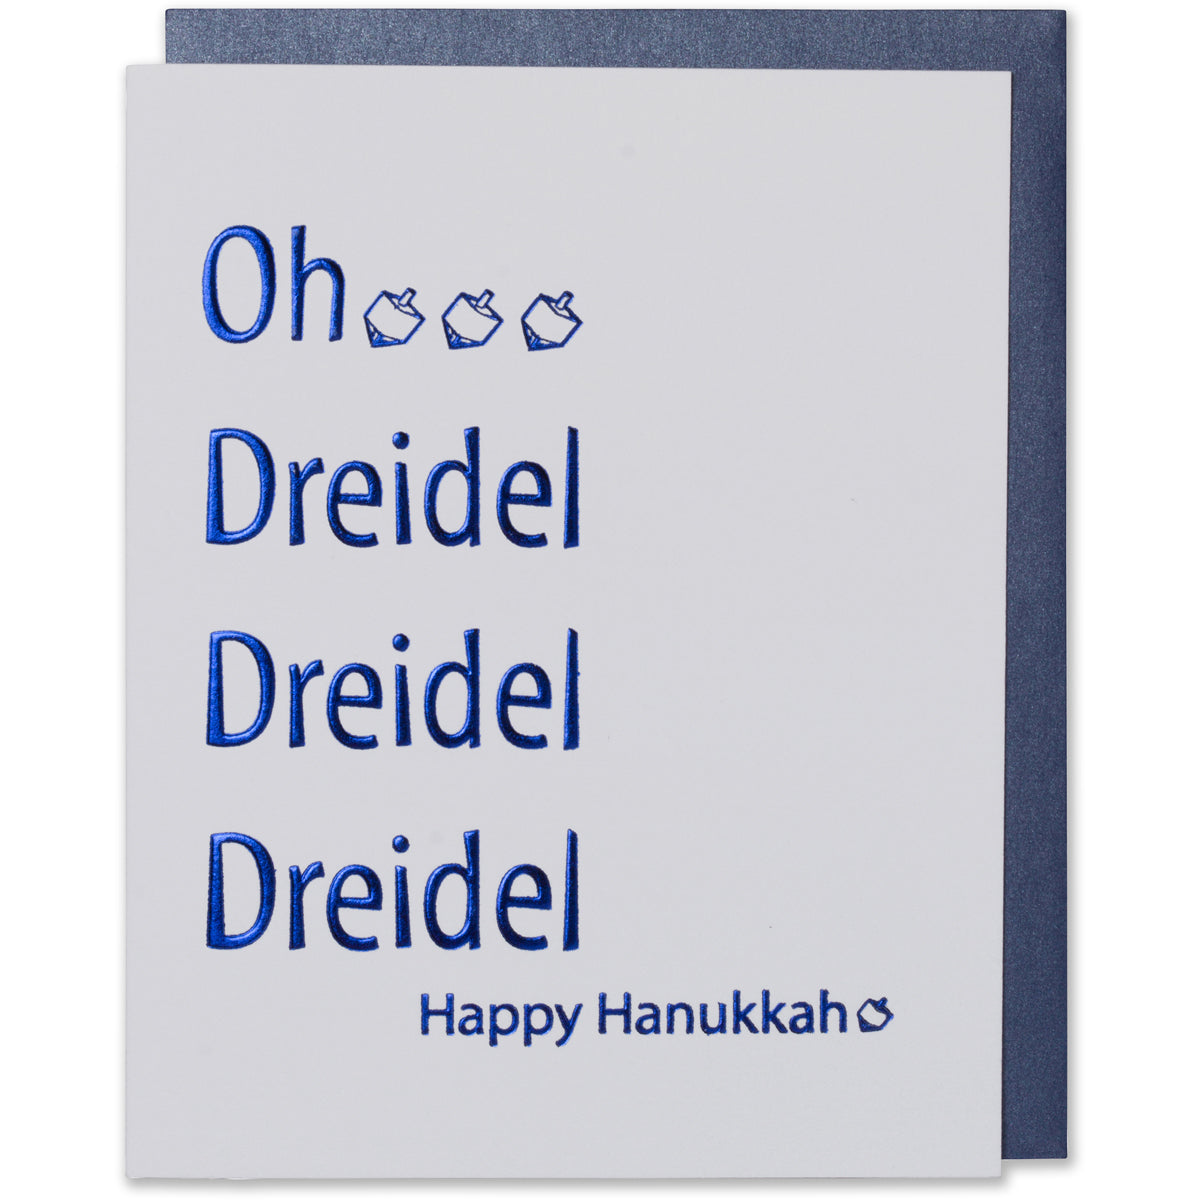 Blue Foil Embossed Oh Dreidel Dreidel Dreidel Happy Hanukkah  with three dreidel images on the holiday card.  Bright white paper with a metallic blue envelope.